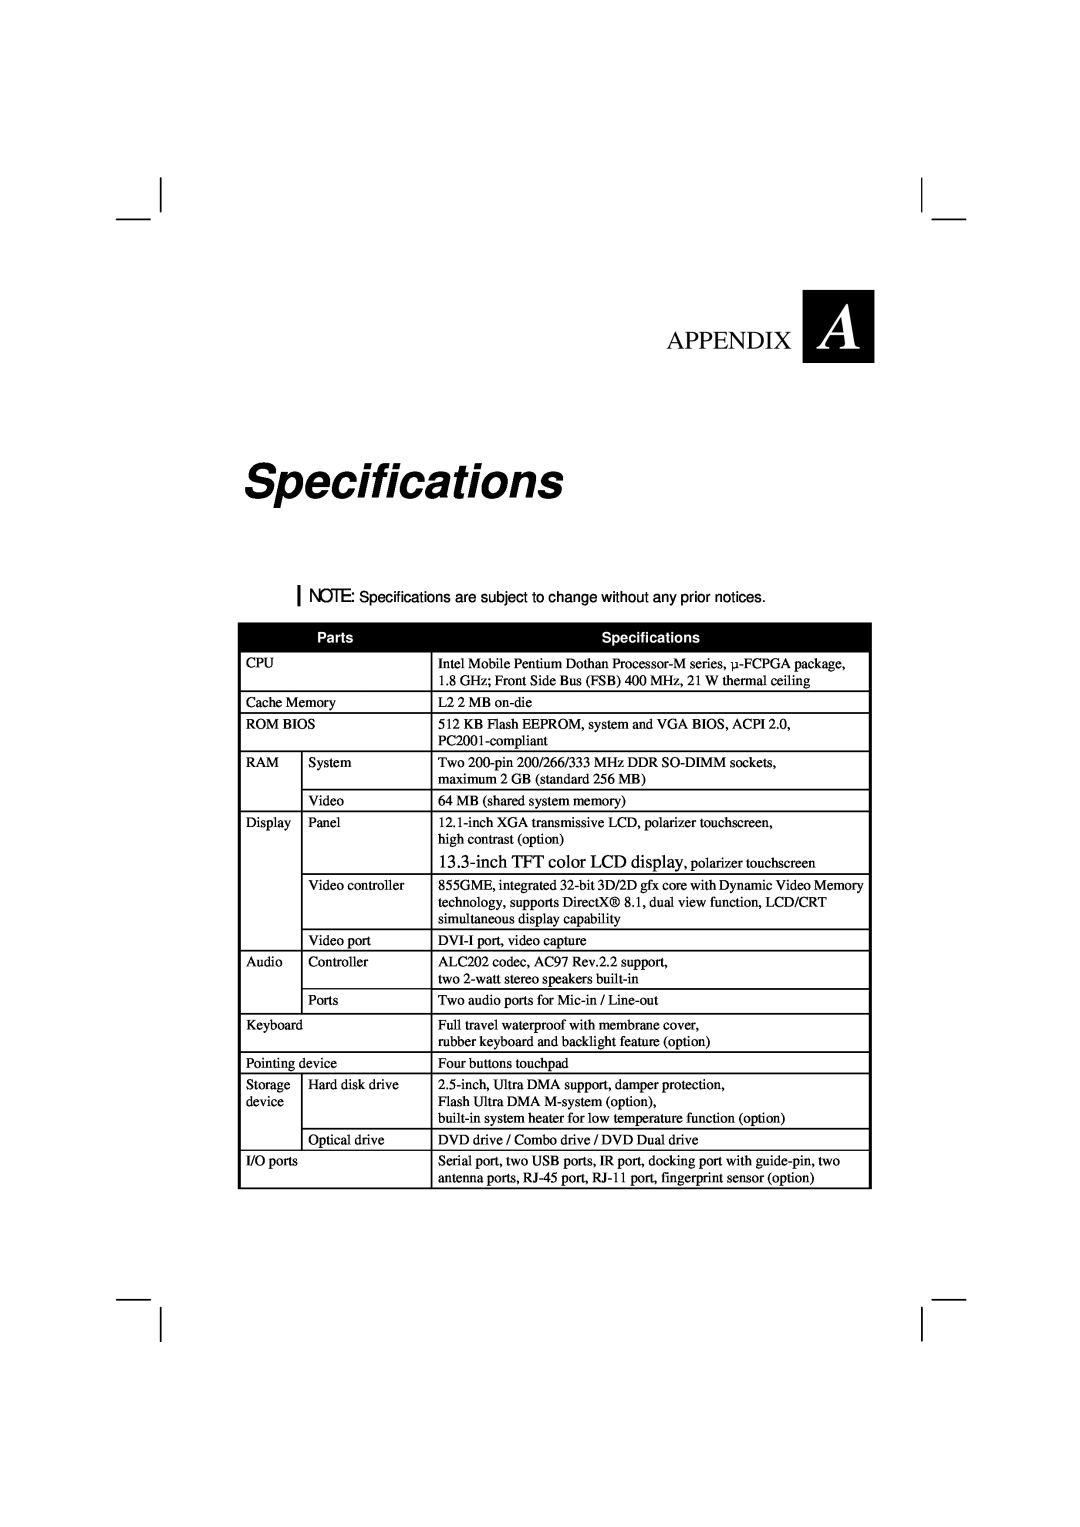 Casio HK1223 owner manual Specifications, Appendix, Parts 